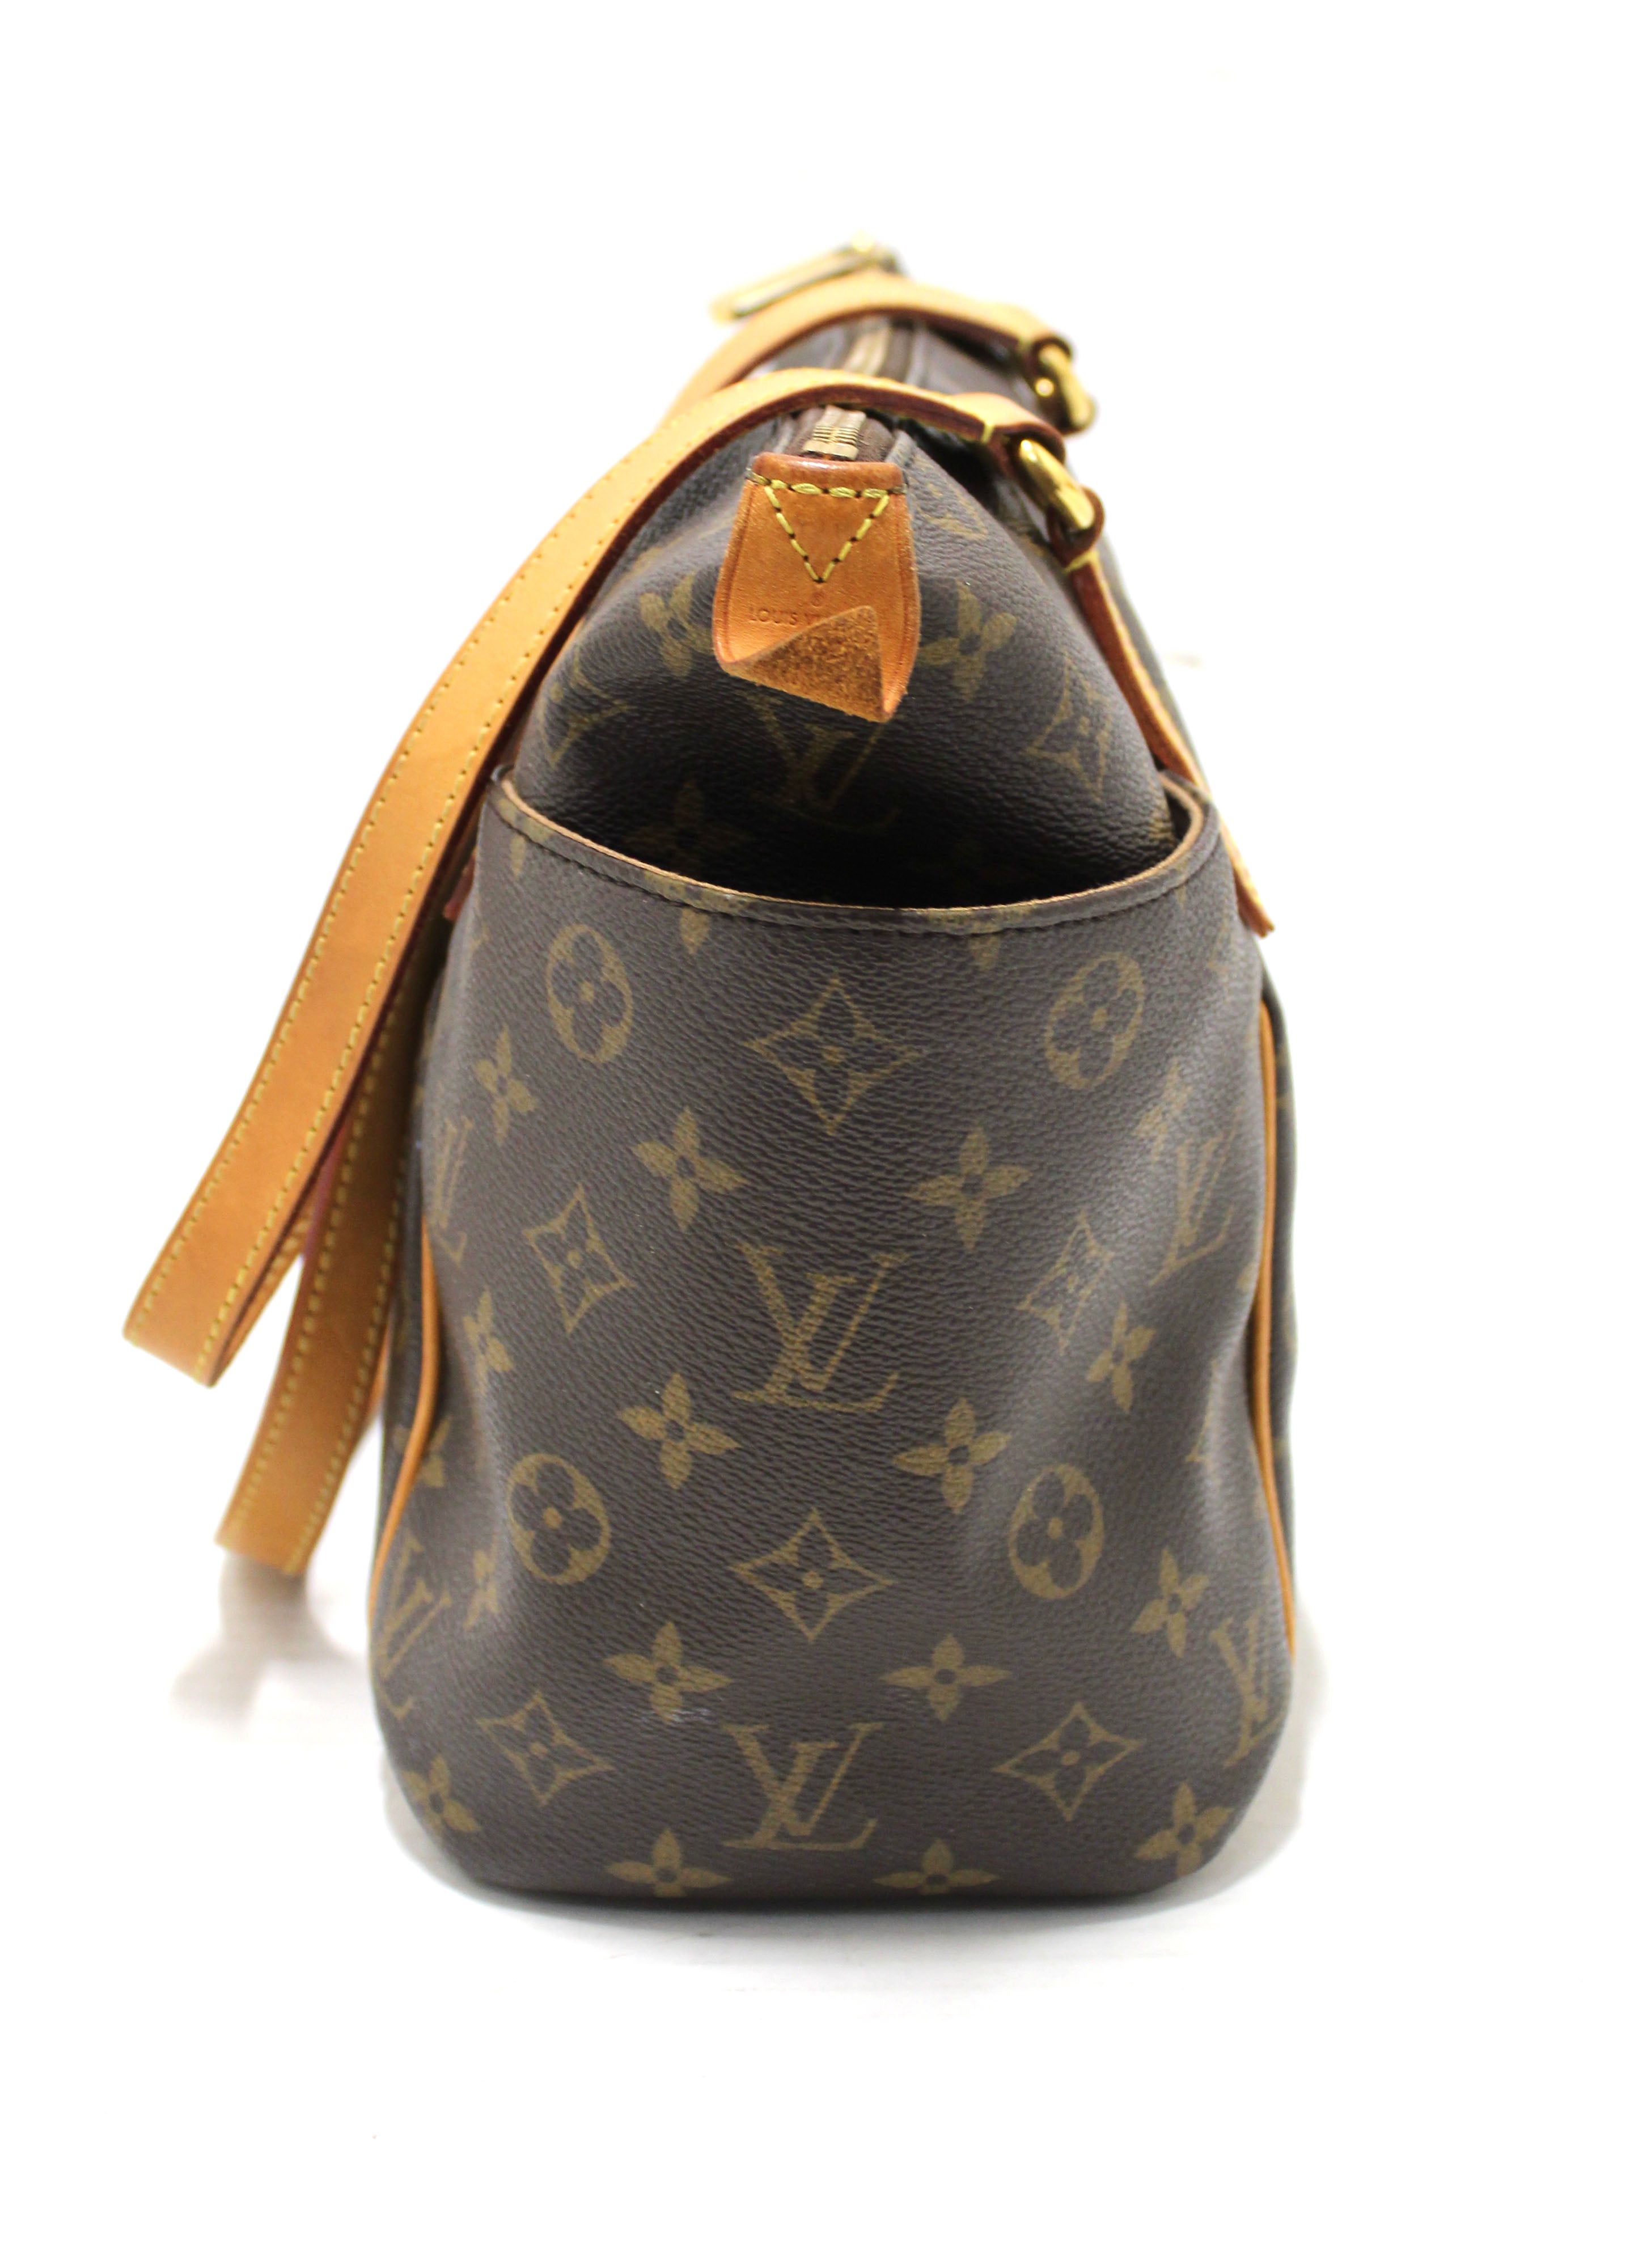 Louis Vuitton Totally PM Monogram Canvas Shoulder Tote Bag